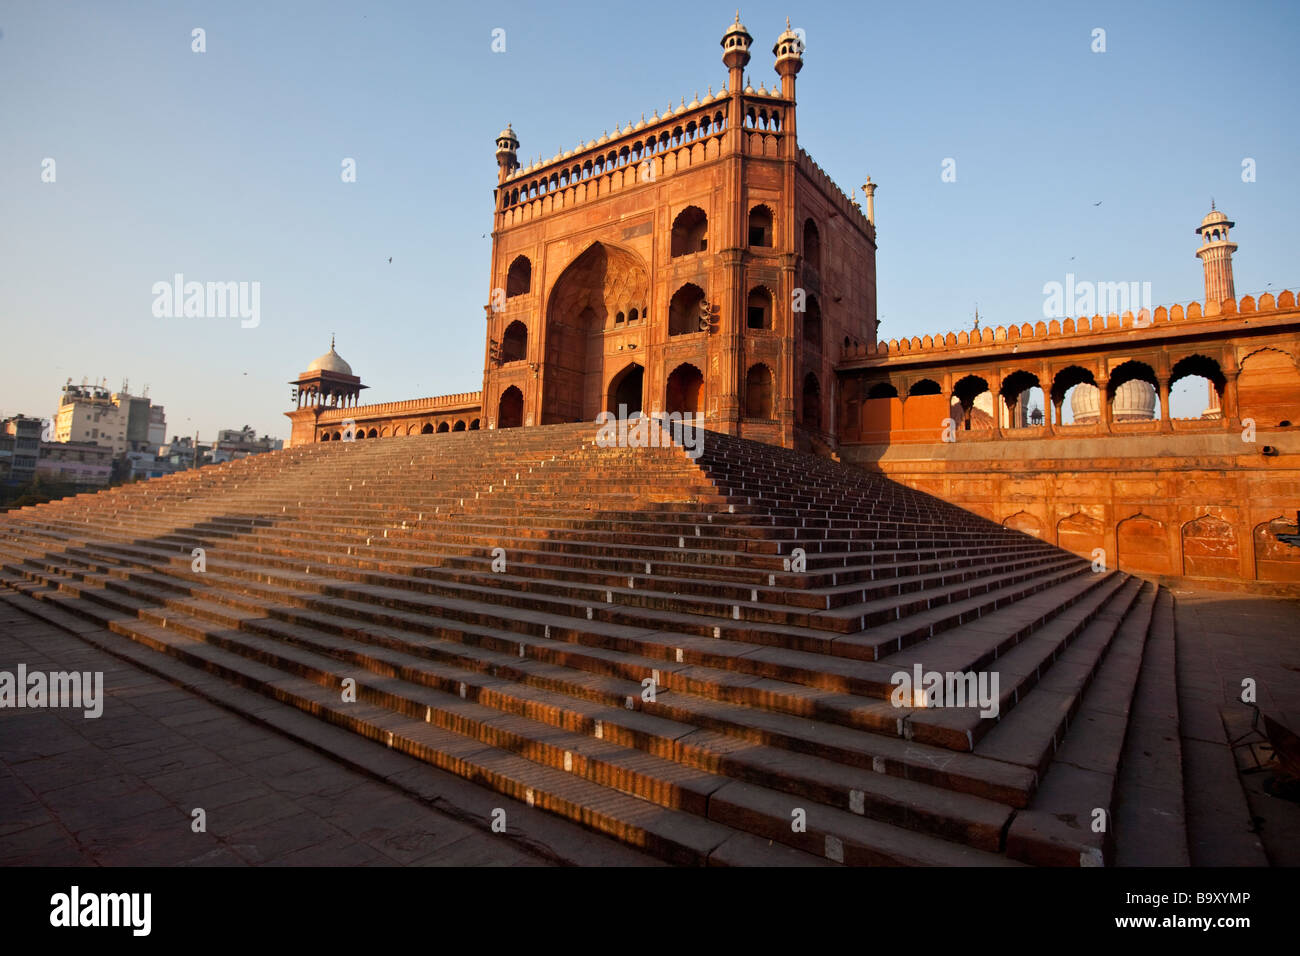 Friday mosque or the Jama Masjid in Delhi India Stock Photo